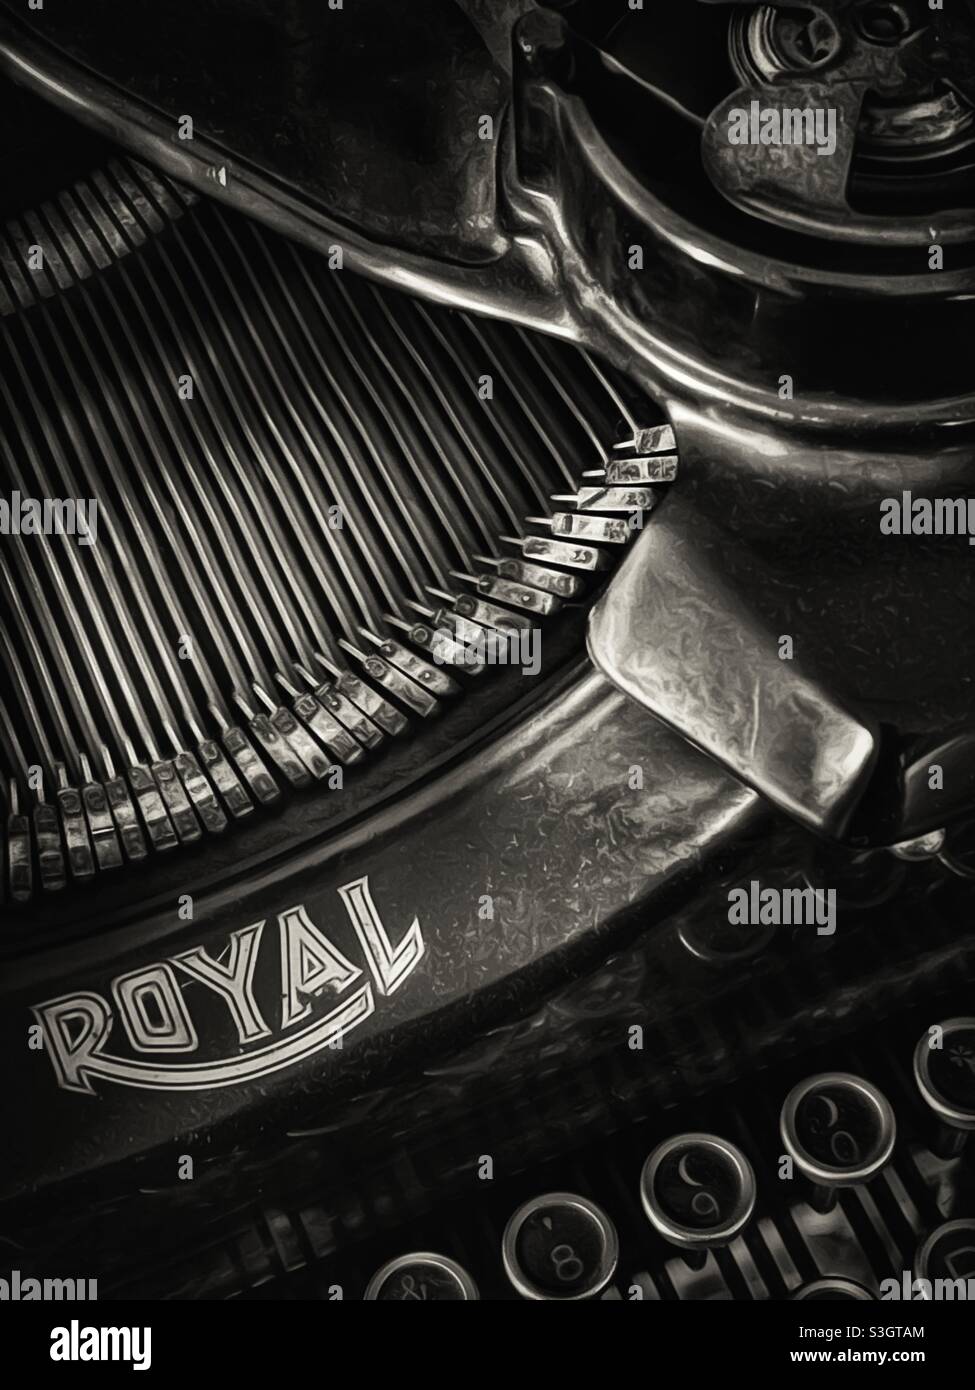 Vintage Royal typewriter in sepia tone Stock Photo